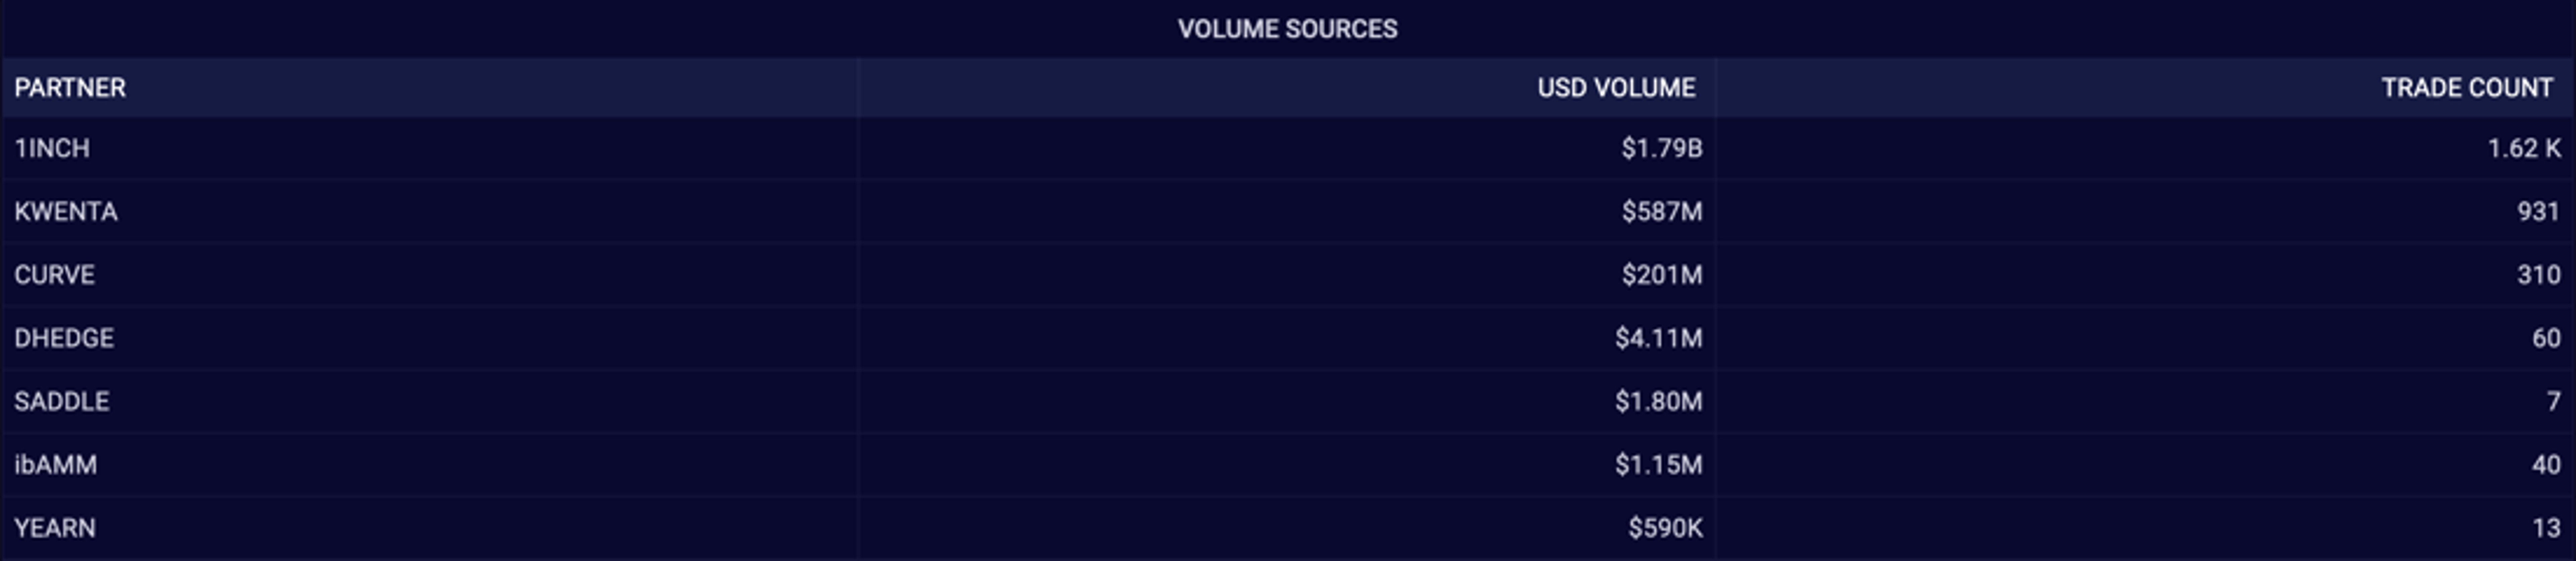 Synthetix volume sources chart